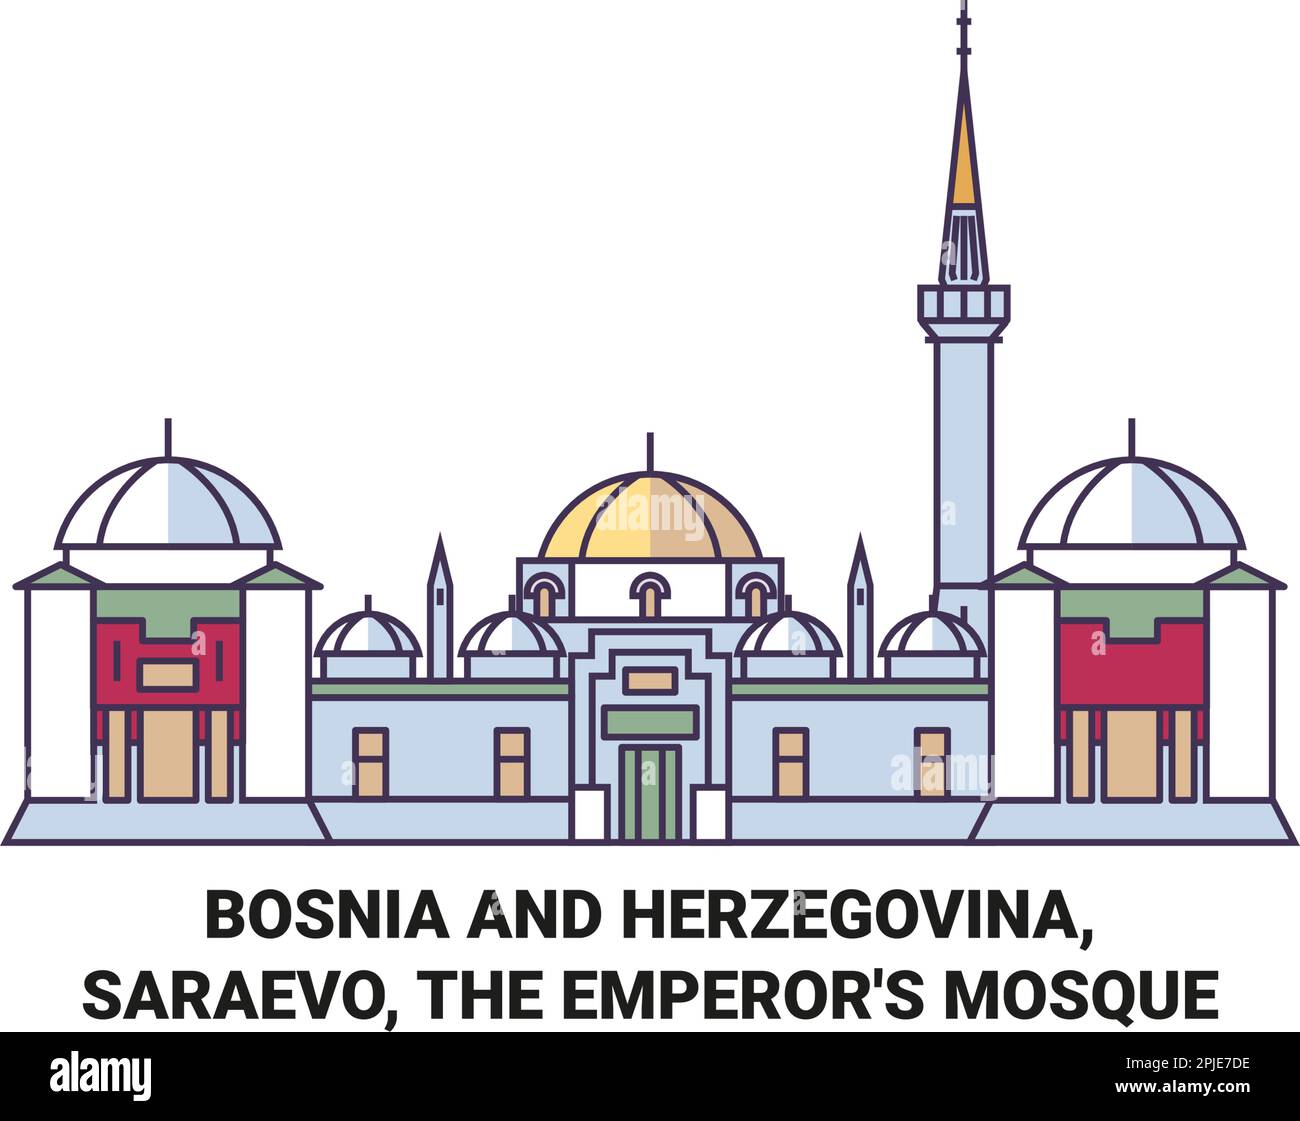 Bosnia And Herzegovina, Saraevo, The Emperor's Mosque travel landmark vector illustration Stock Vector